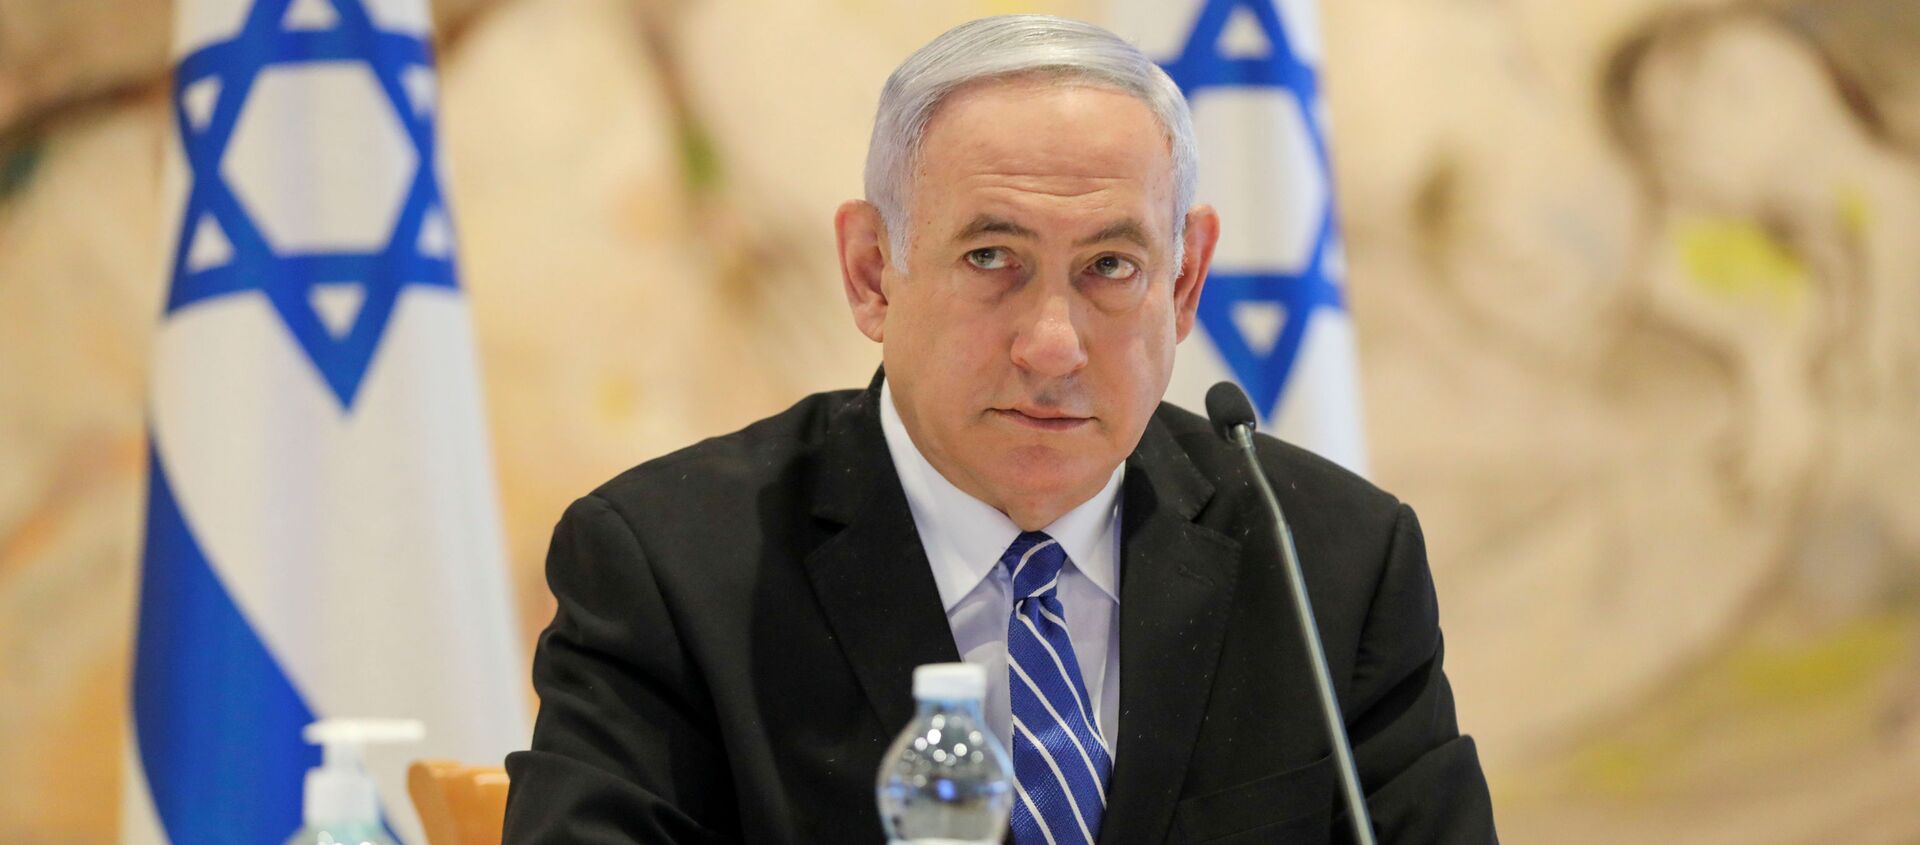 Benjamín Netanyahu, primer ministro de Israel  - Sputnik Mundo, 1920, 25.05.2020